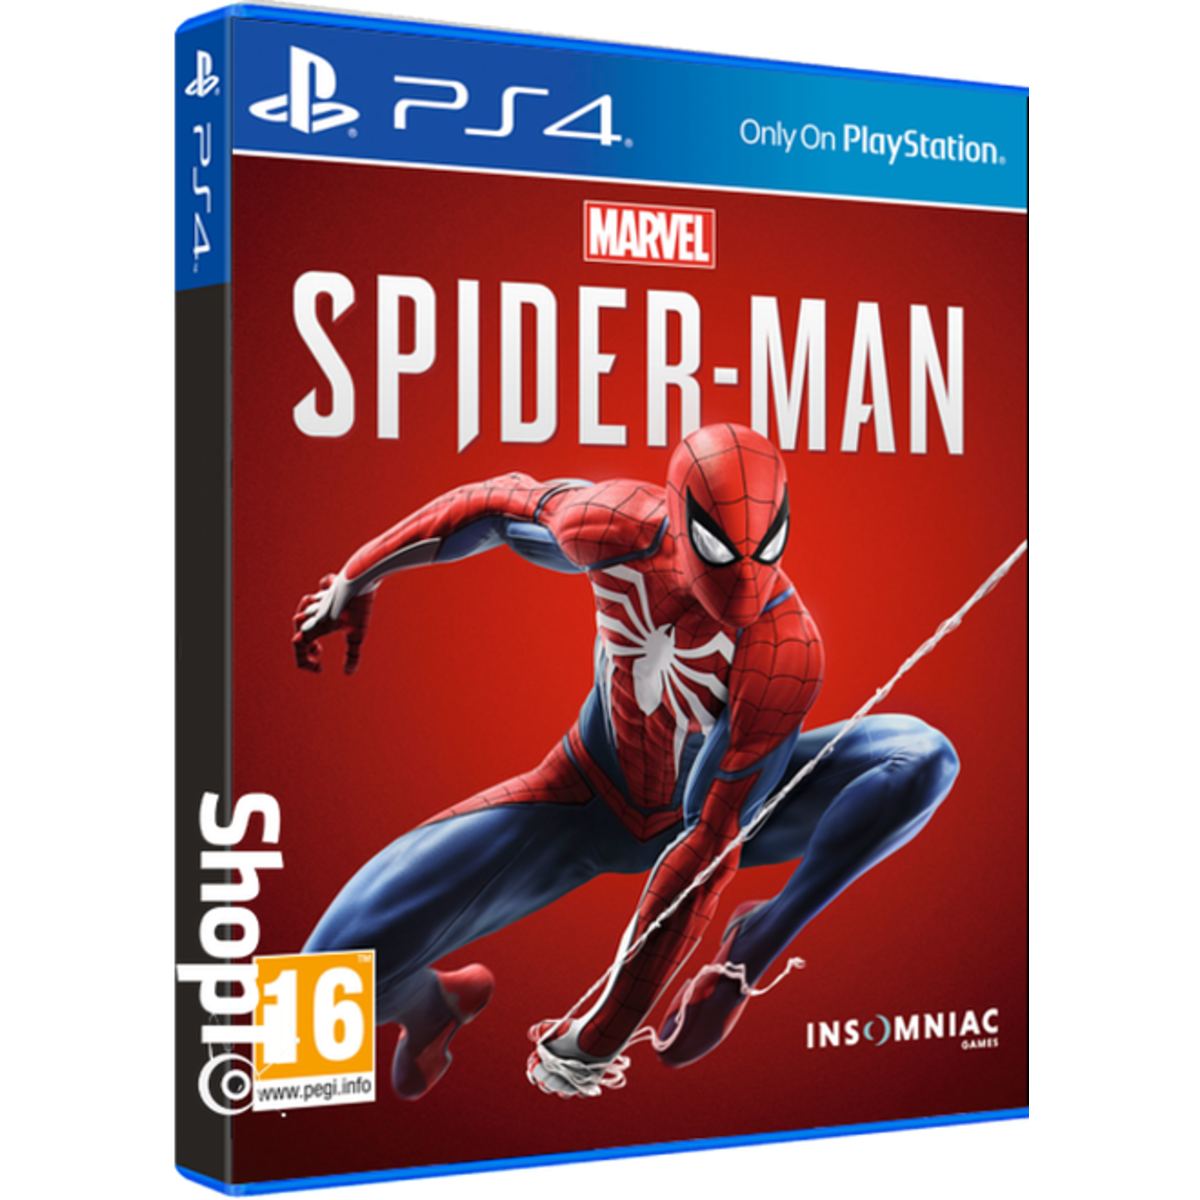 Buy Marvel's Spider-Man - PS4 | ShopTo.net